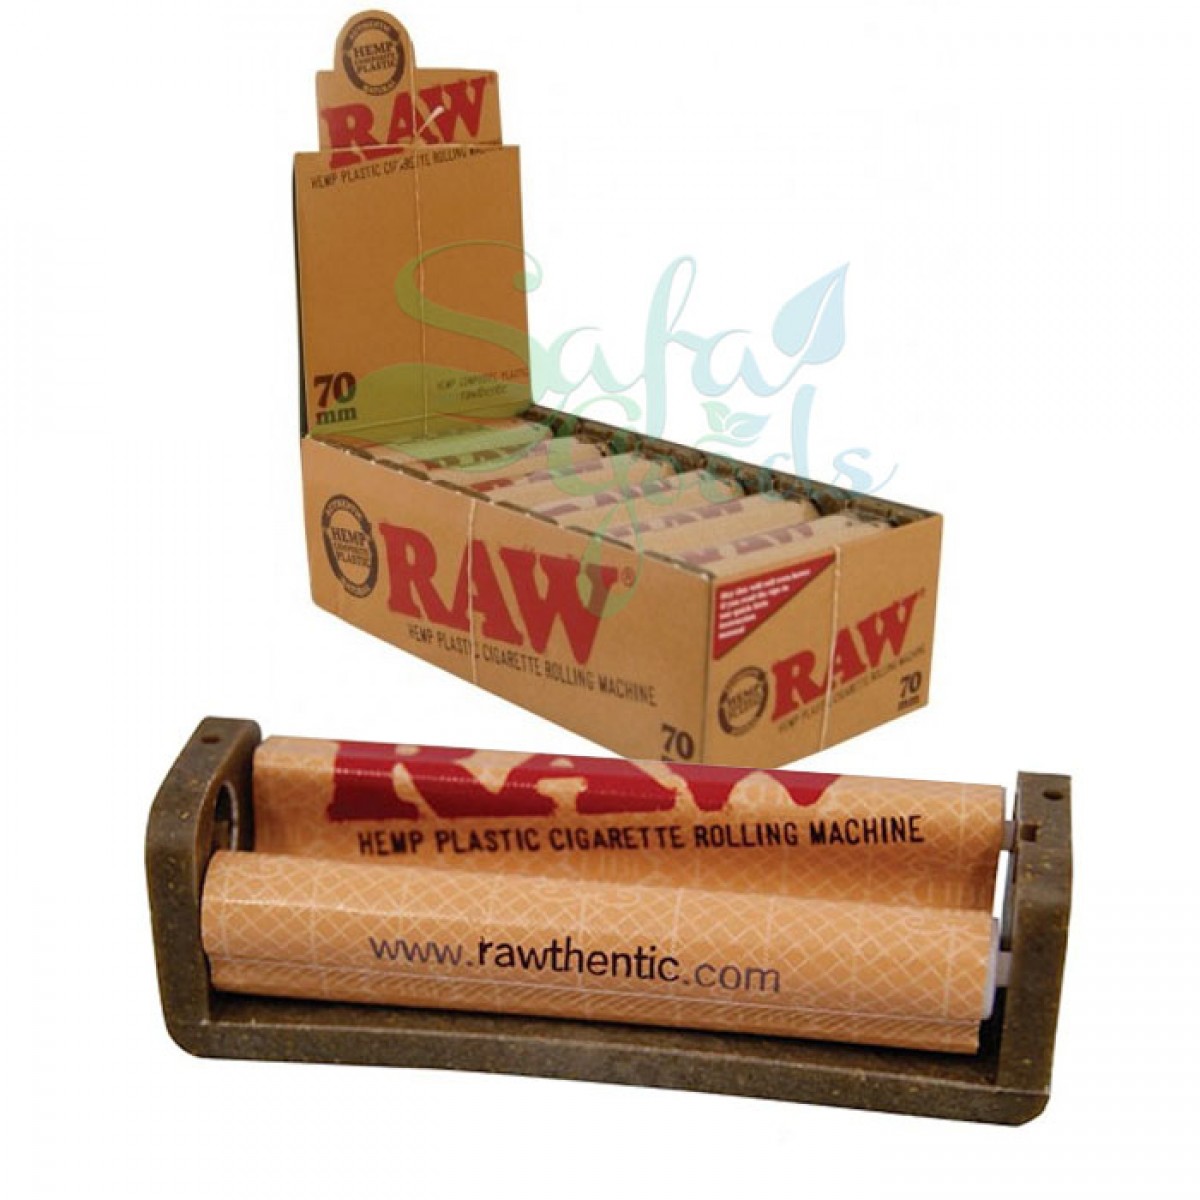 Raw Cigarette Rolling Machine 70mm - Box